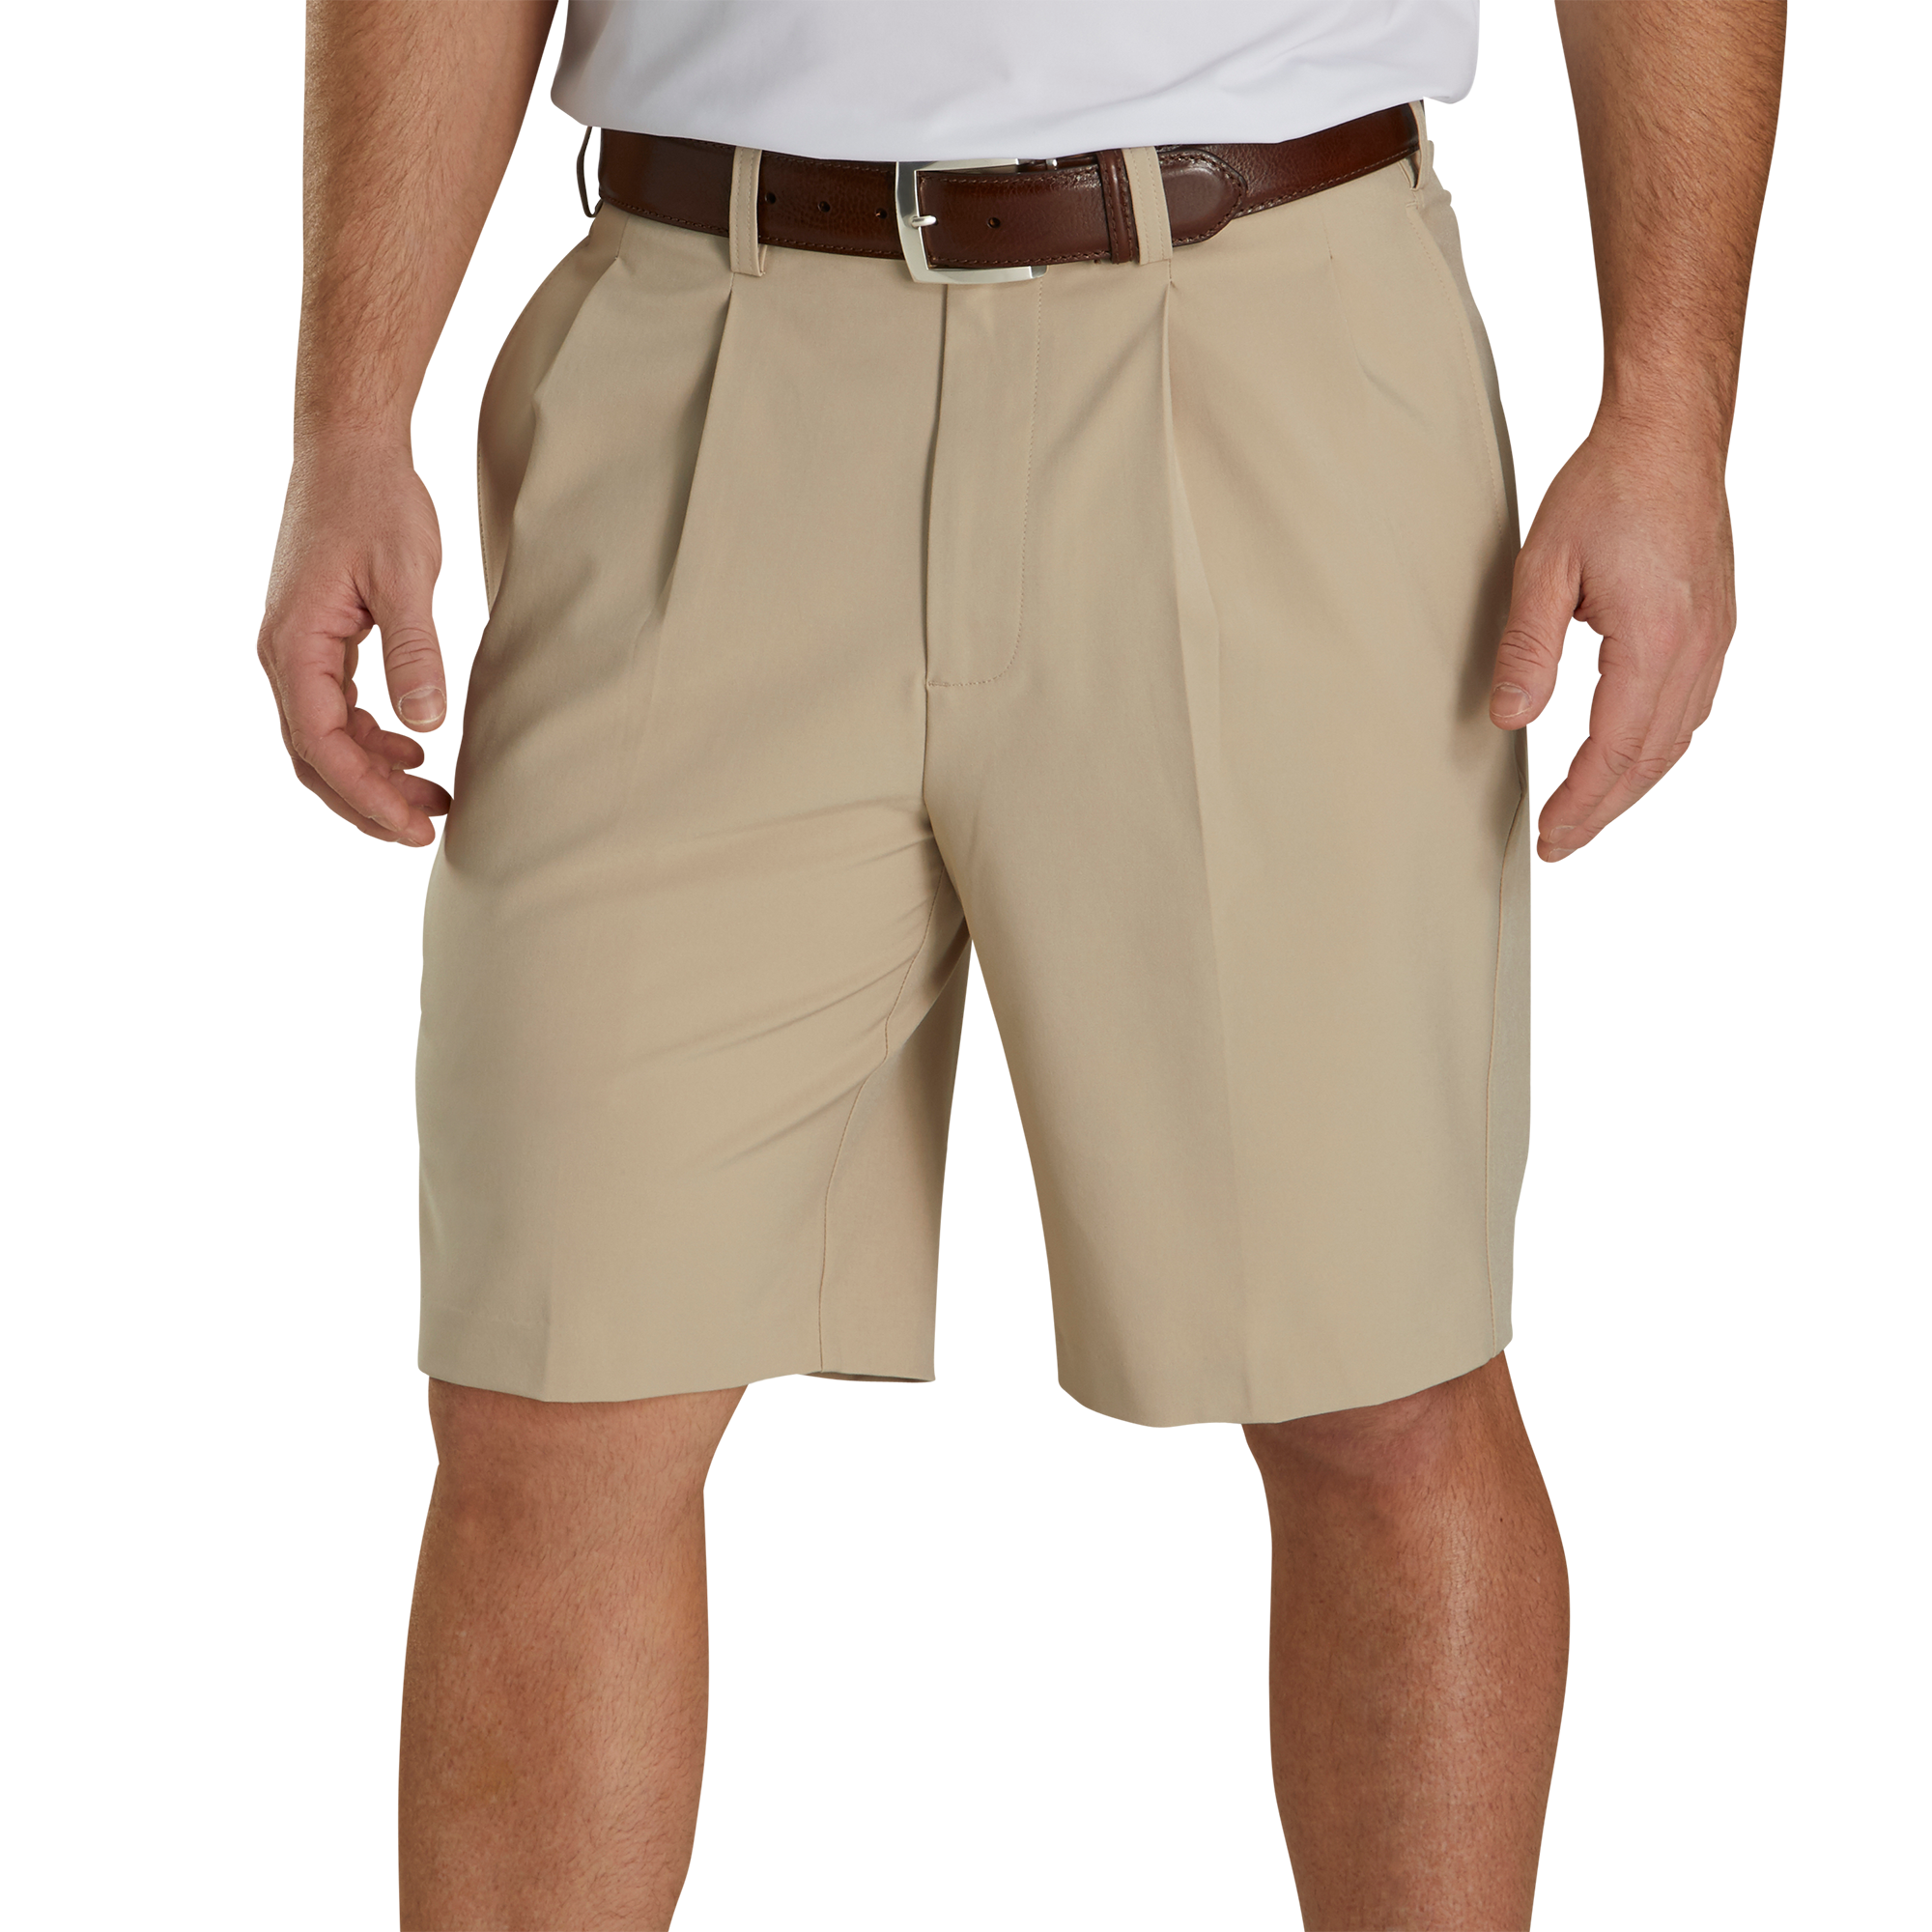 FootJoy Mens Golf Footjoy Beige Shorts Size 32, 